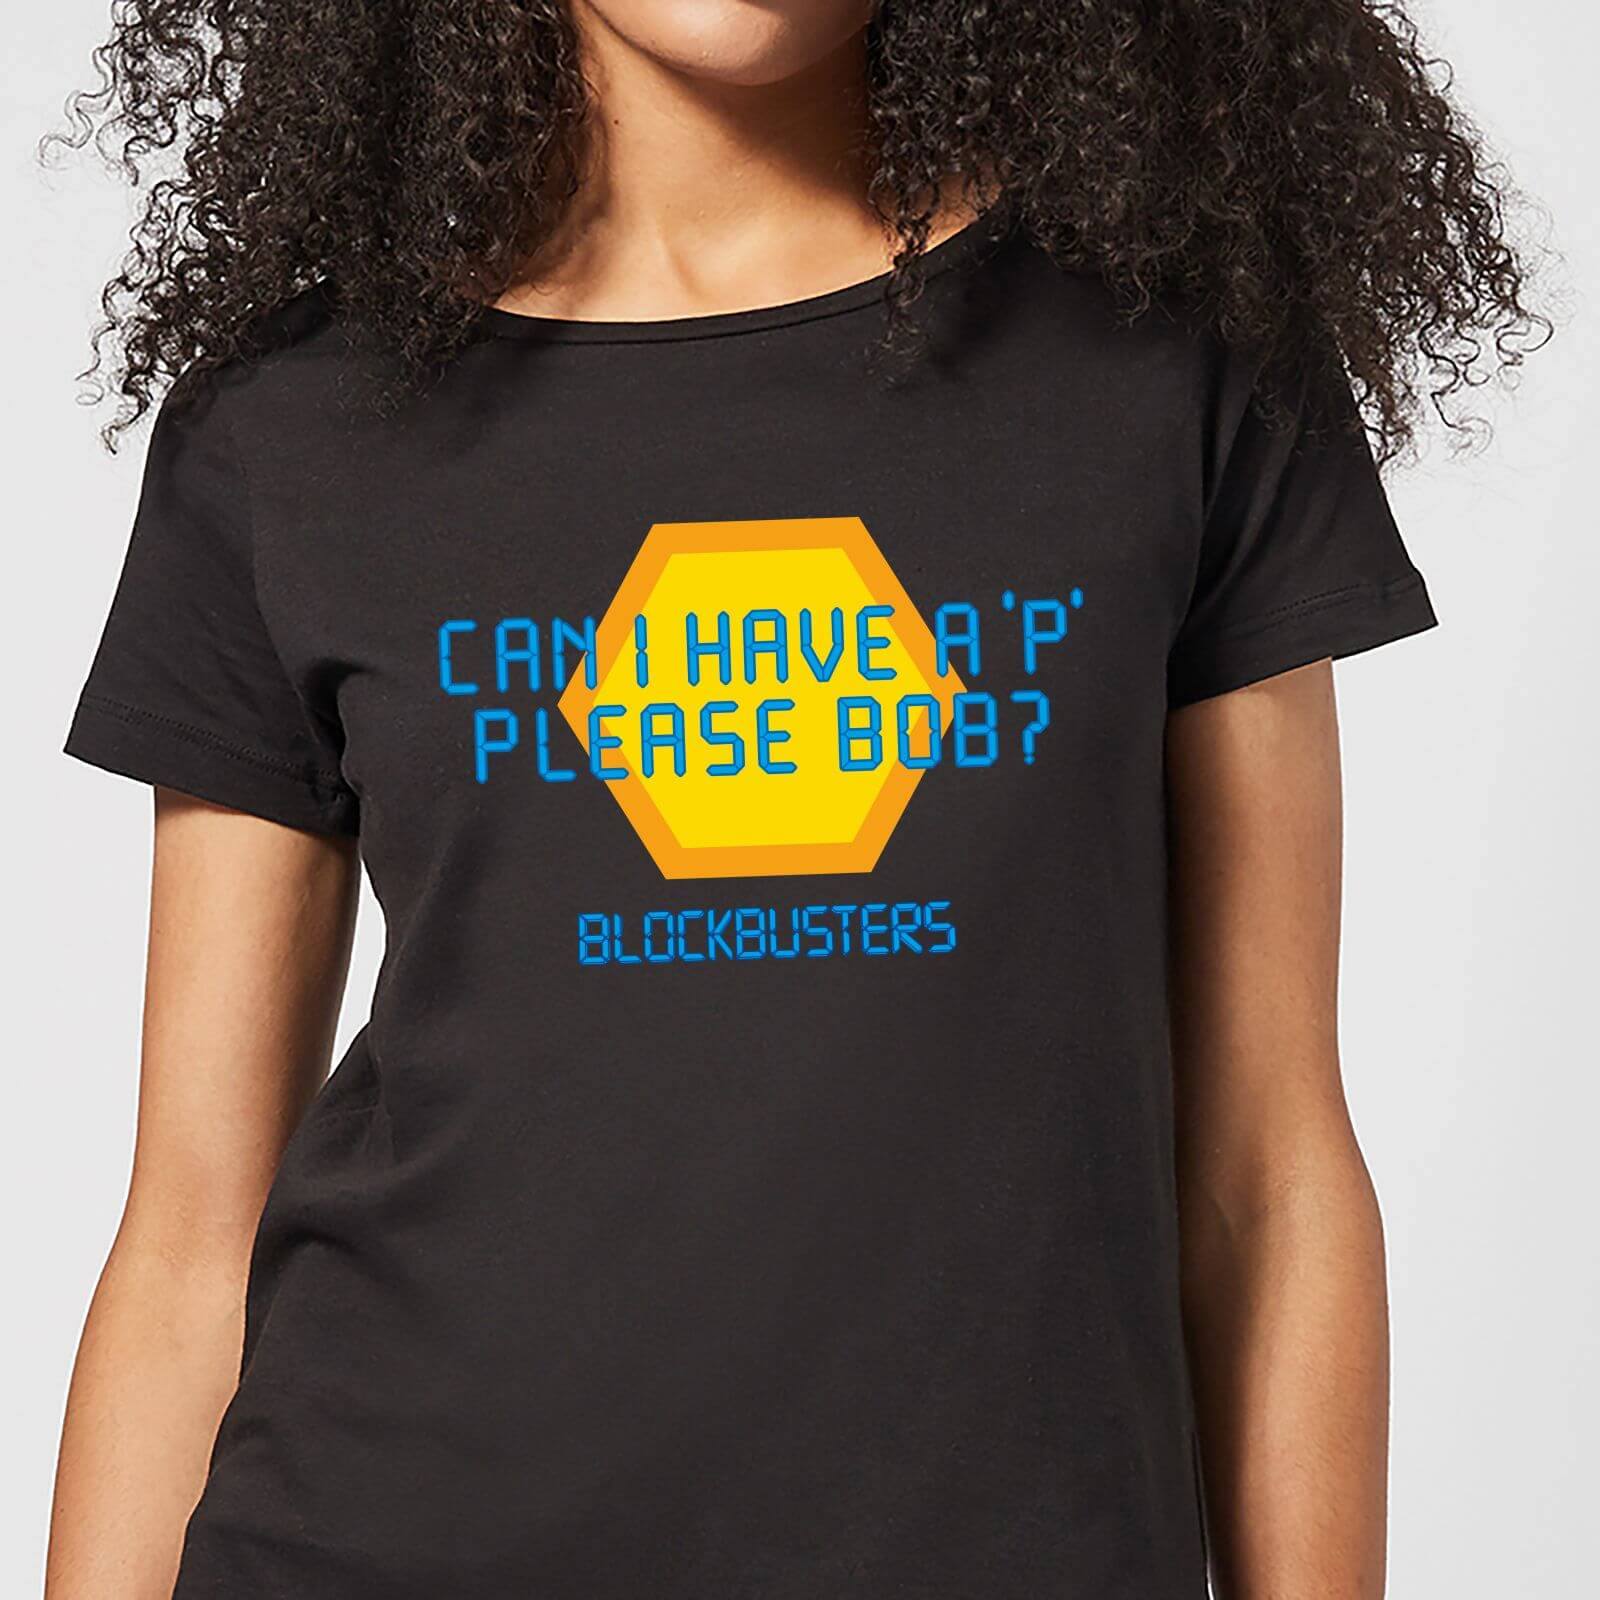 Blockbusters Can I Have A 'P' Please Bob? Women's T-Shirt - Black - S - Black